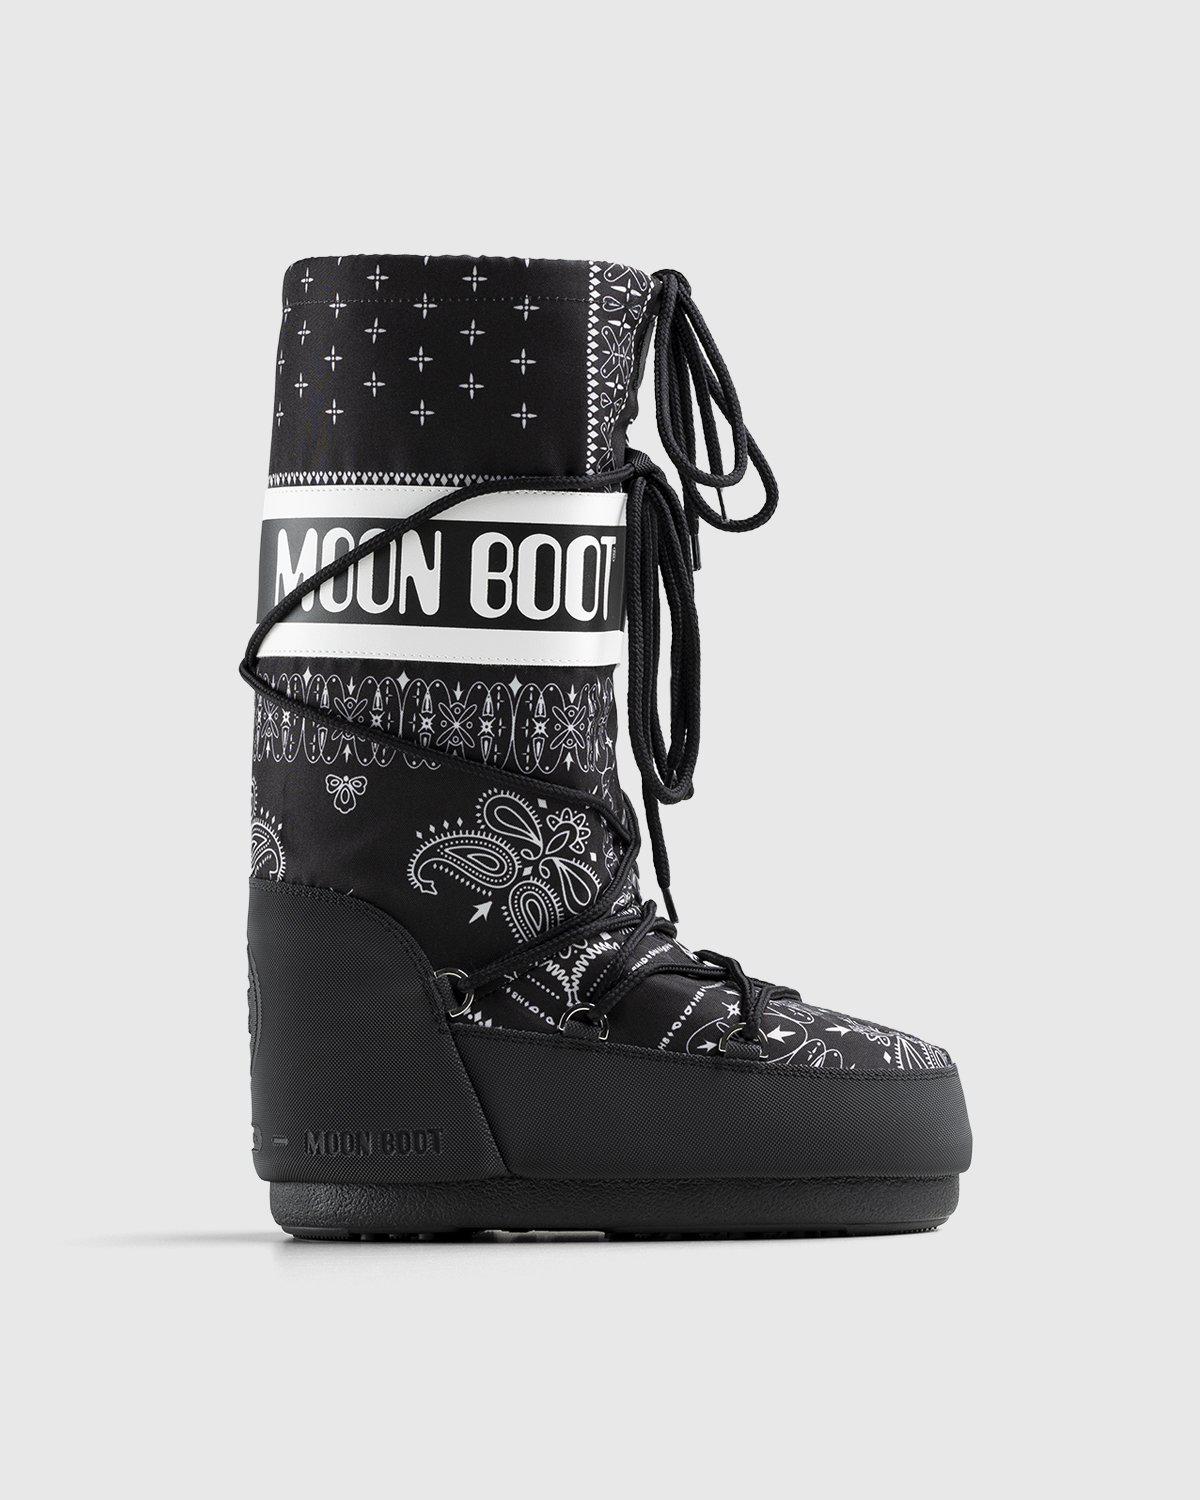 Moon Boot x Highsnobiety – Icon Boot Bandana Black by MOON BOOT X HIGHSNOBIETY